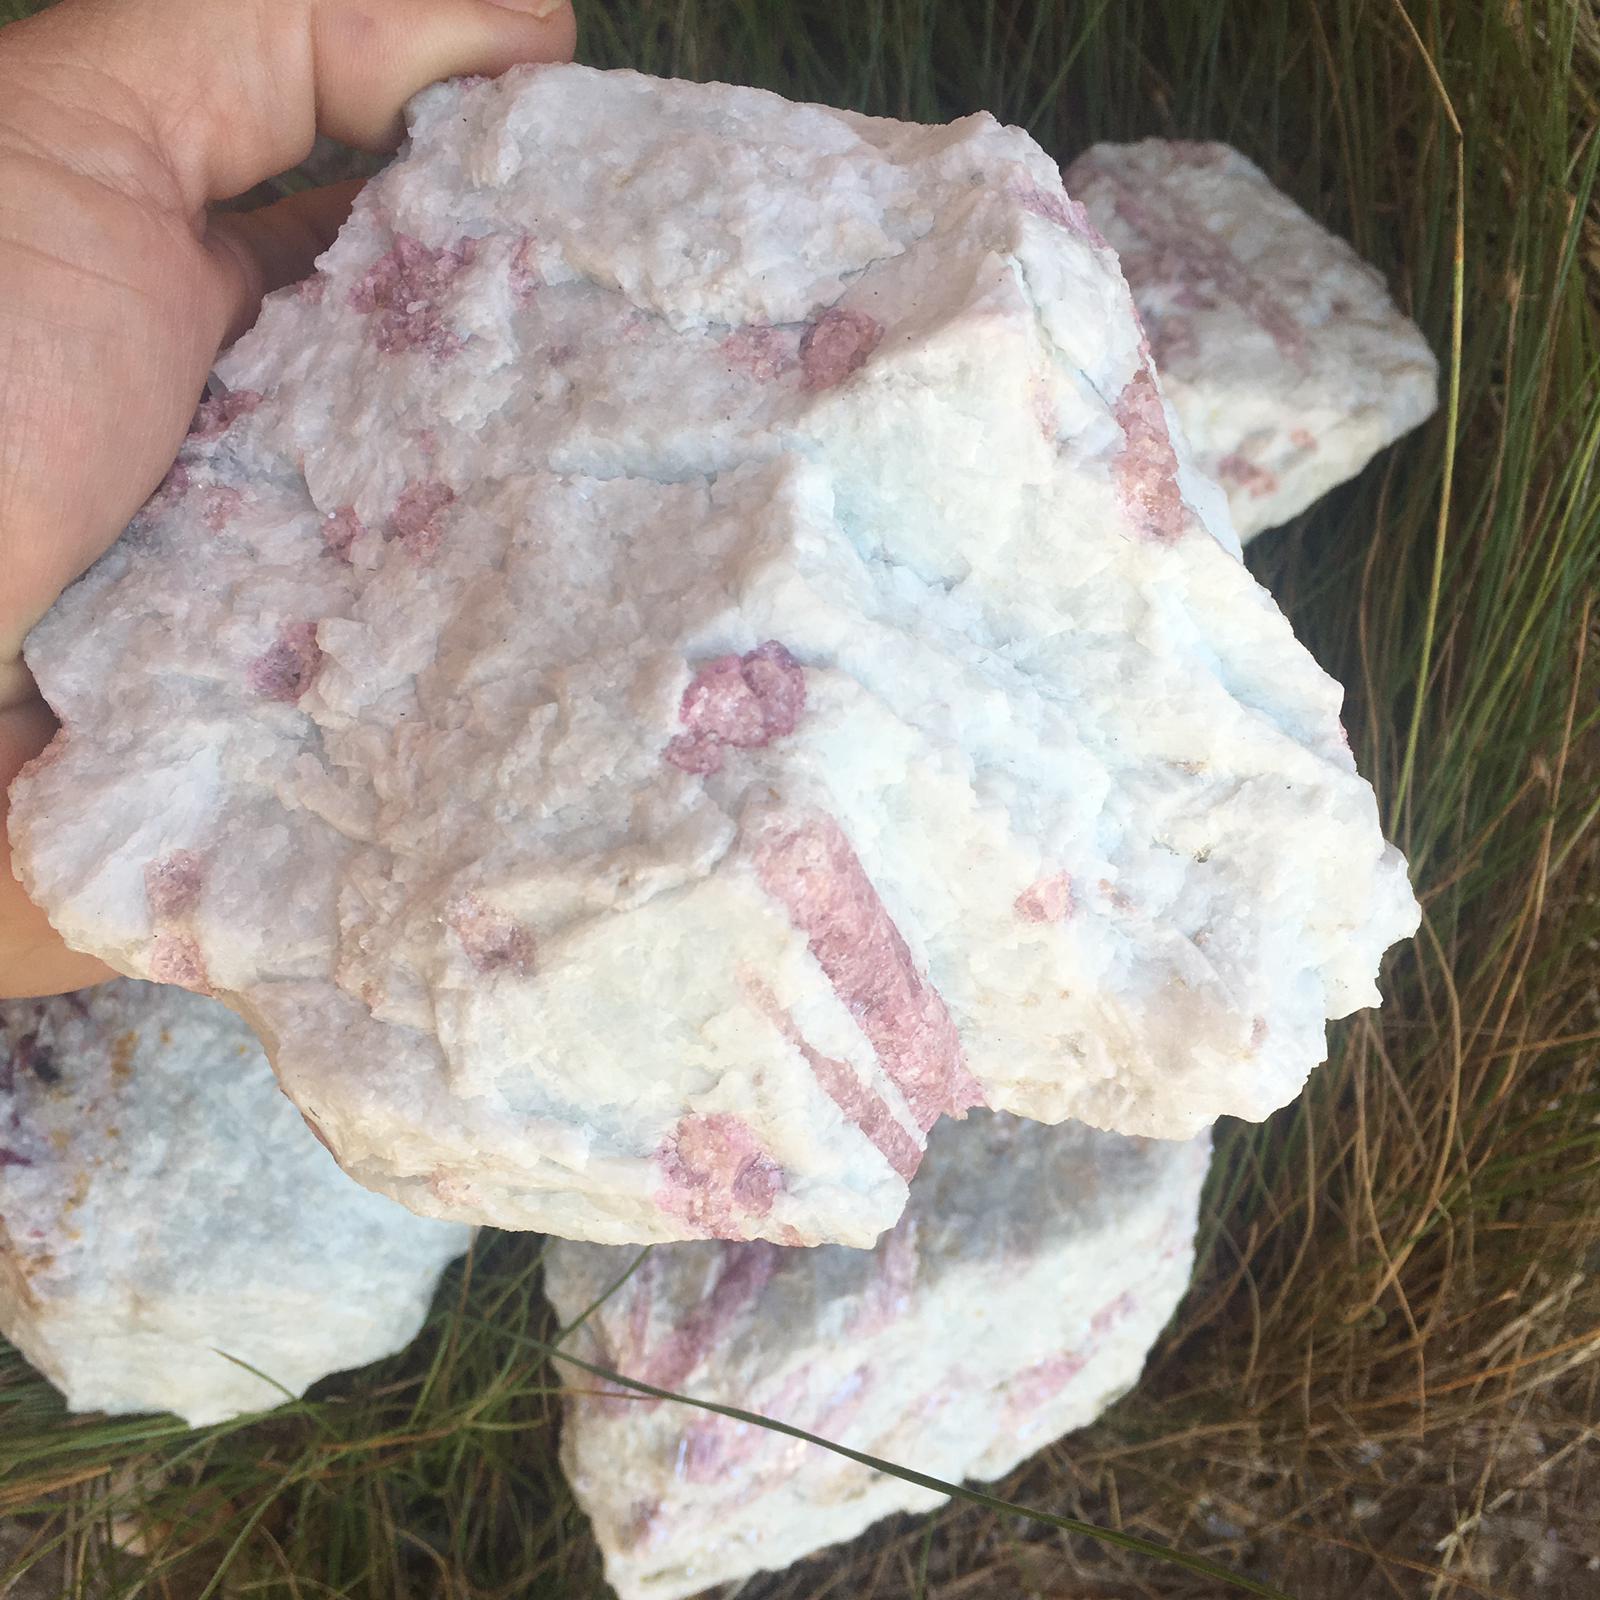 Stones from Uruguay - Rubellite Tourmaline in Matrix - Natural Color Pink Tourmaline in Pegmatite Matrix Specimen